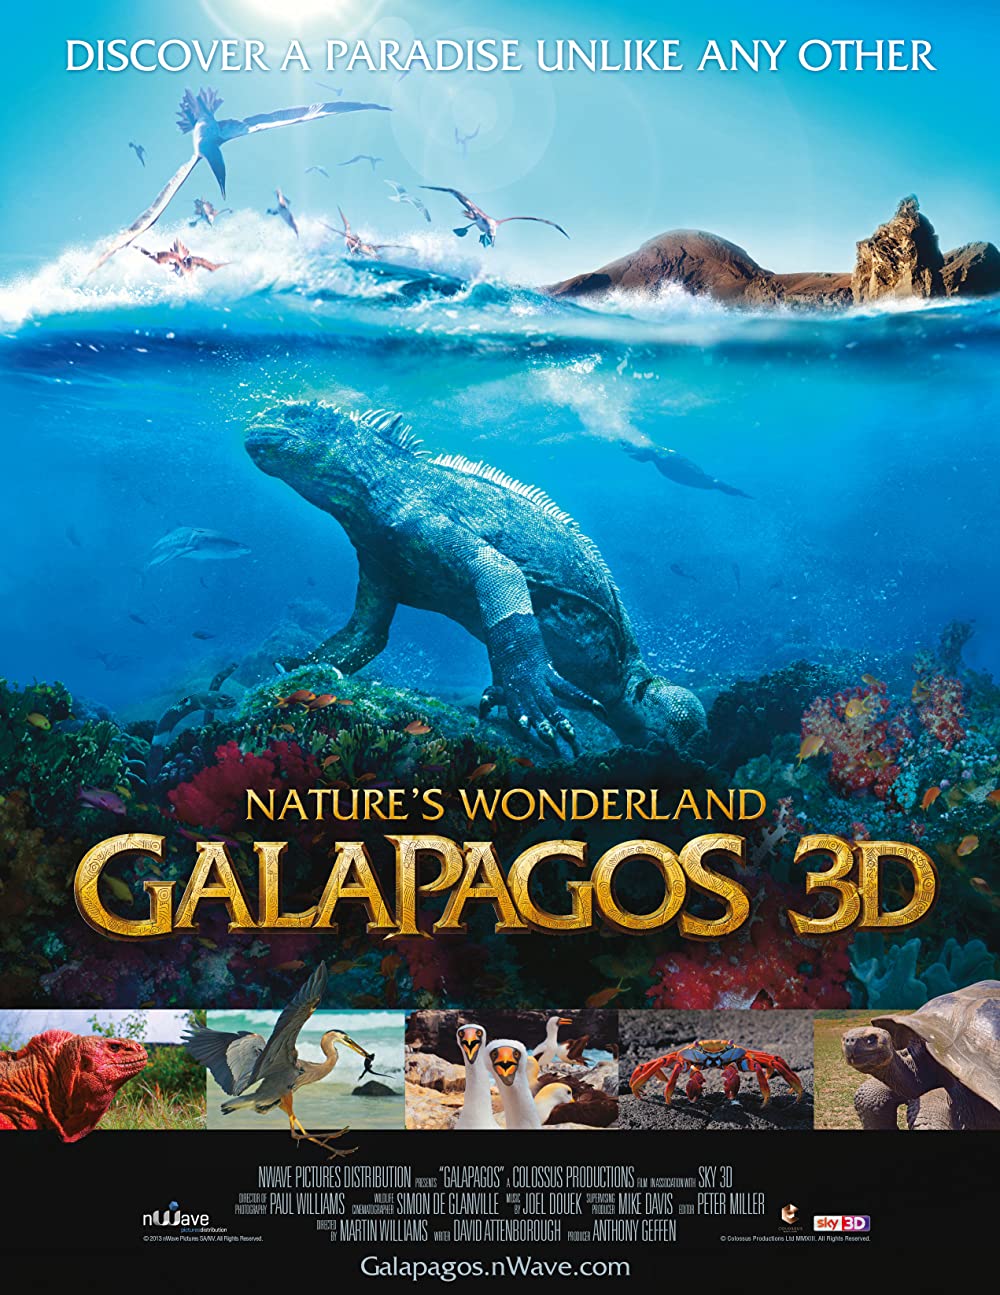 Filmbeschreibung zu Galapagos - Wunderland der Natur 3D